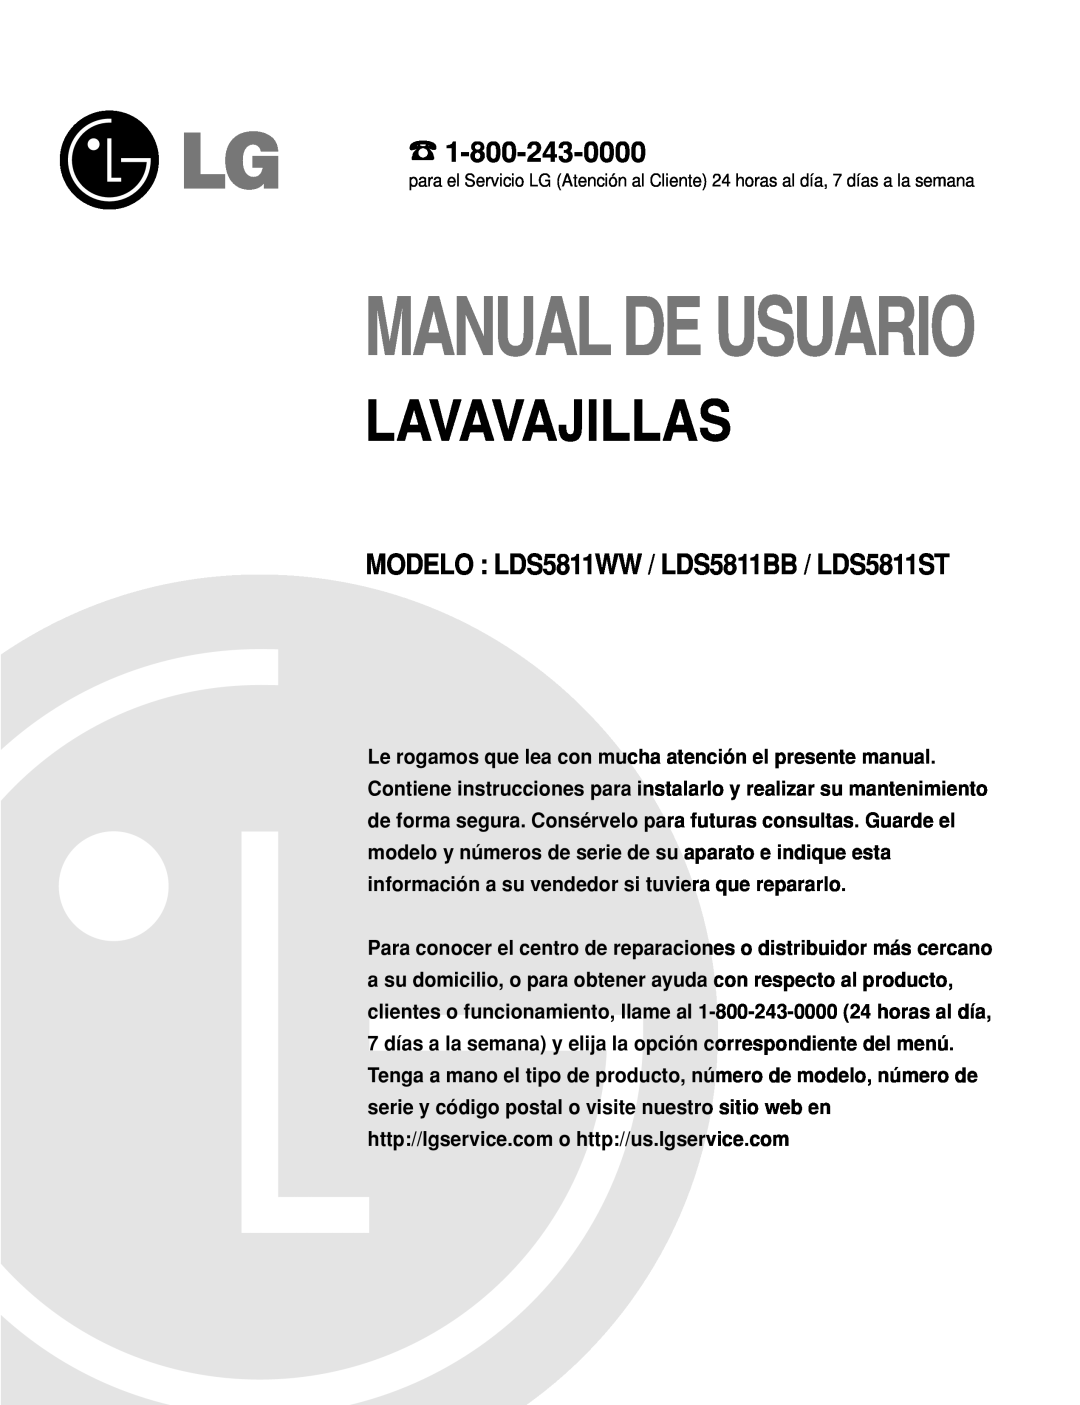 LG Electronics manual MODELO LDS5811WW / LDS5811BB / LDS5811ST 